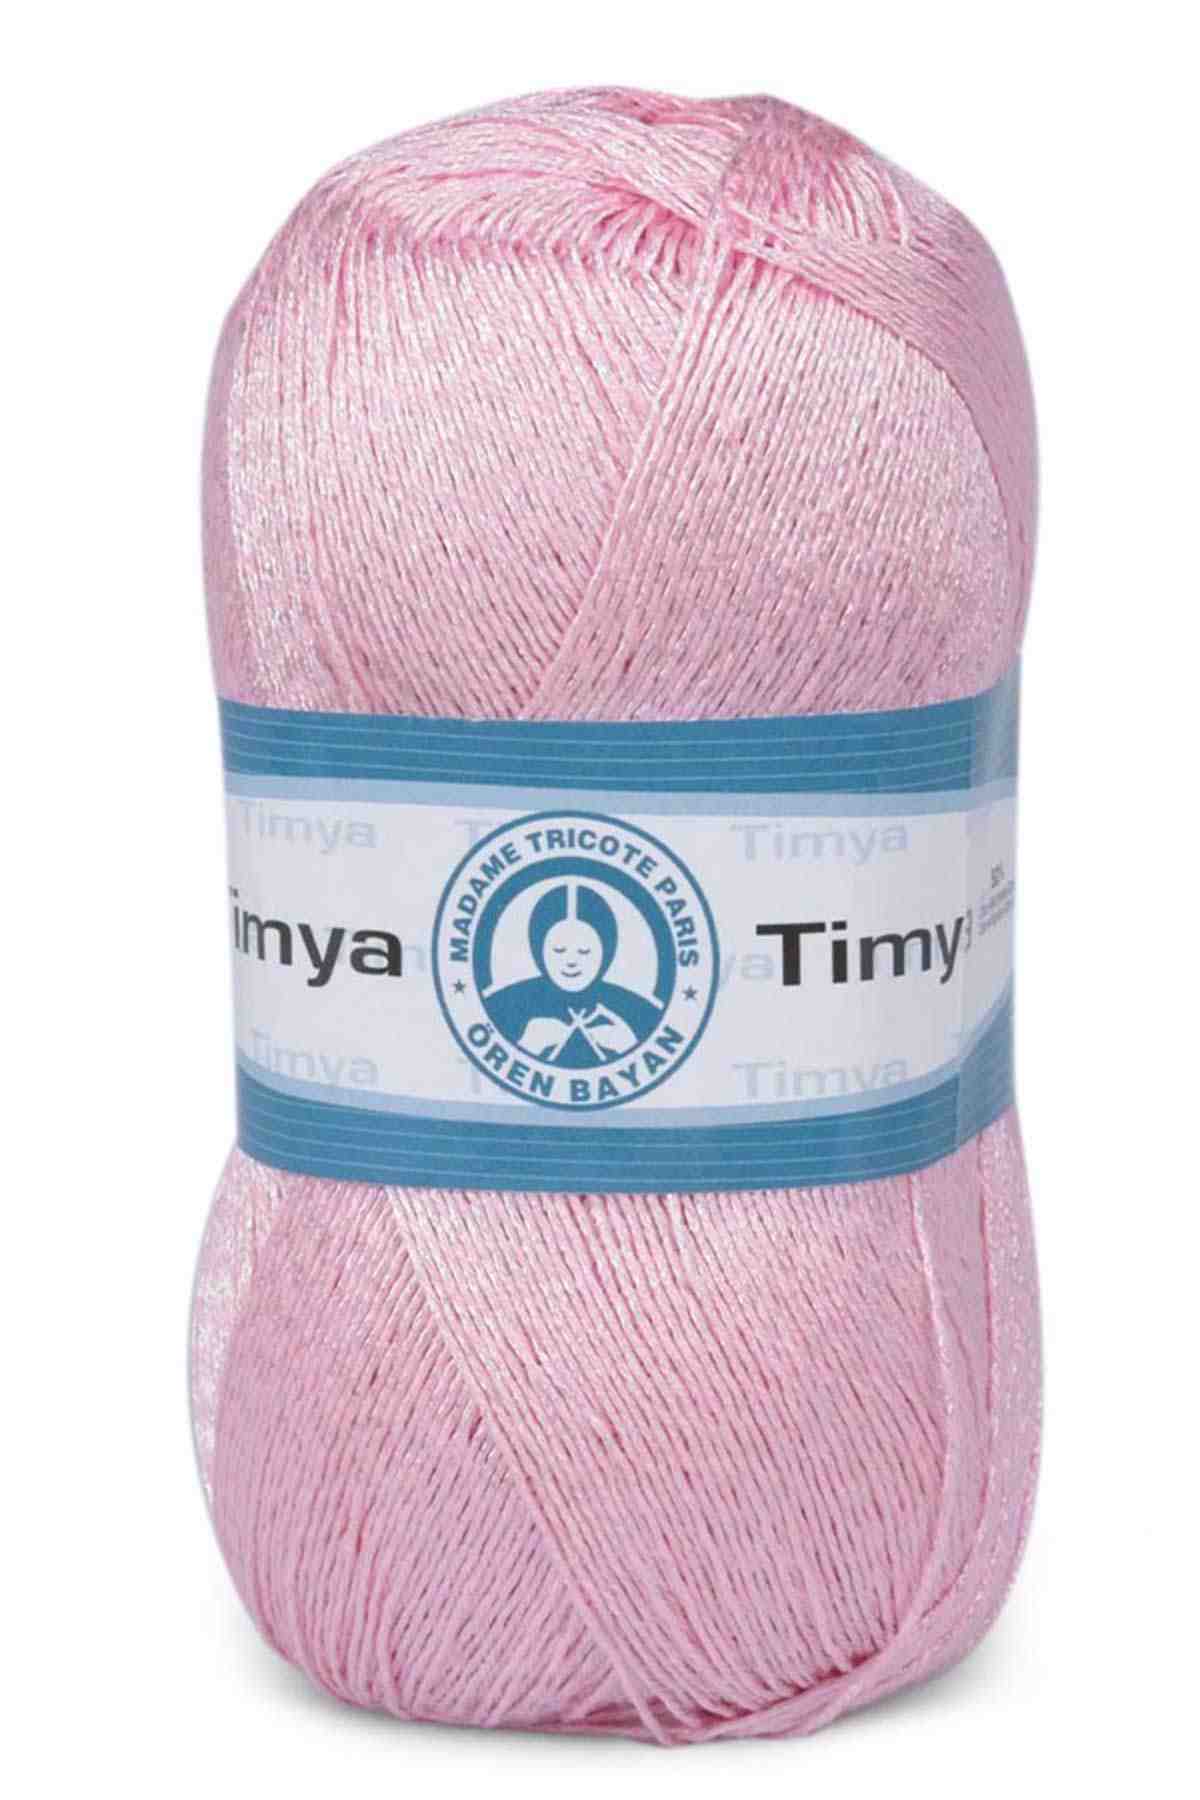 Madame Tricote Paris Timya Cotton Yarn